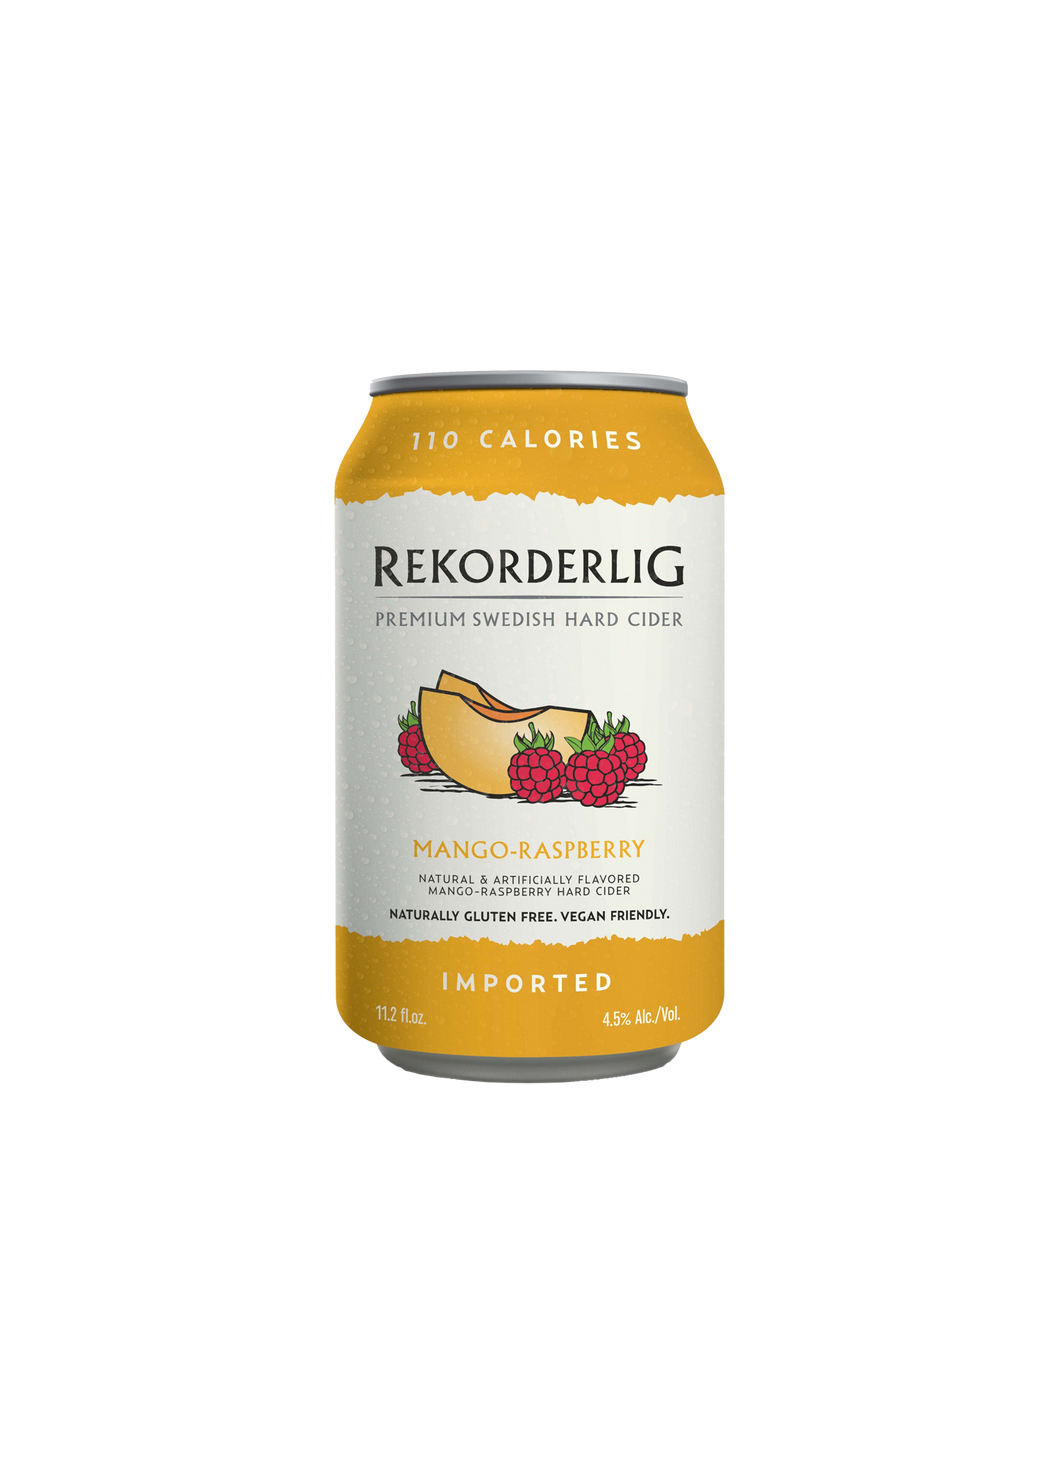 Rekorderlig Mango-Raspberry Swedish Hard Cider